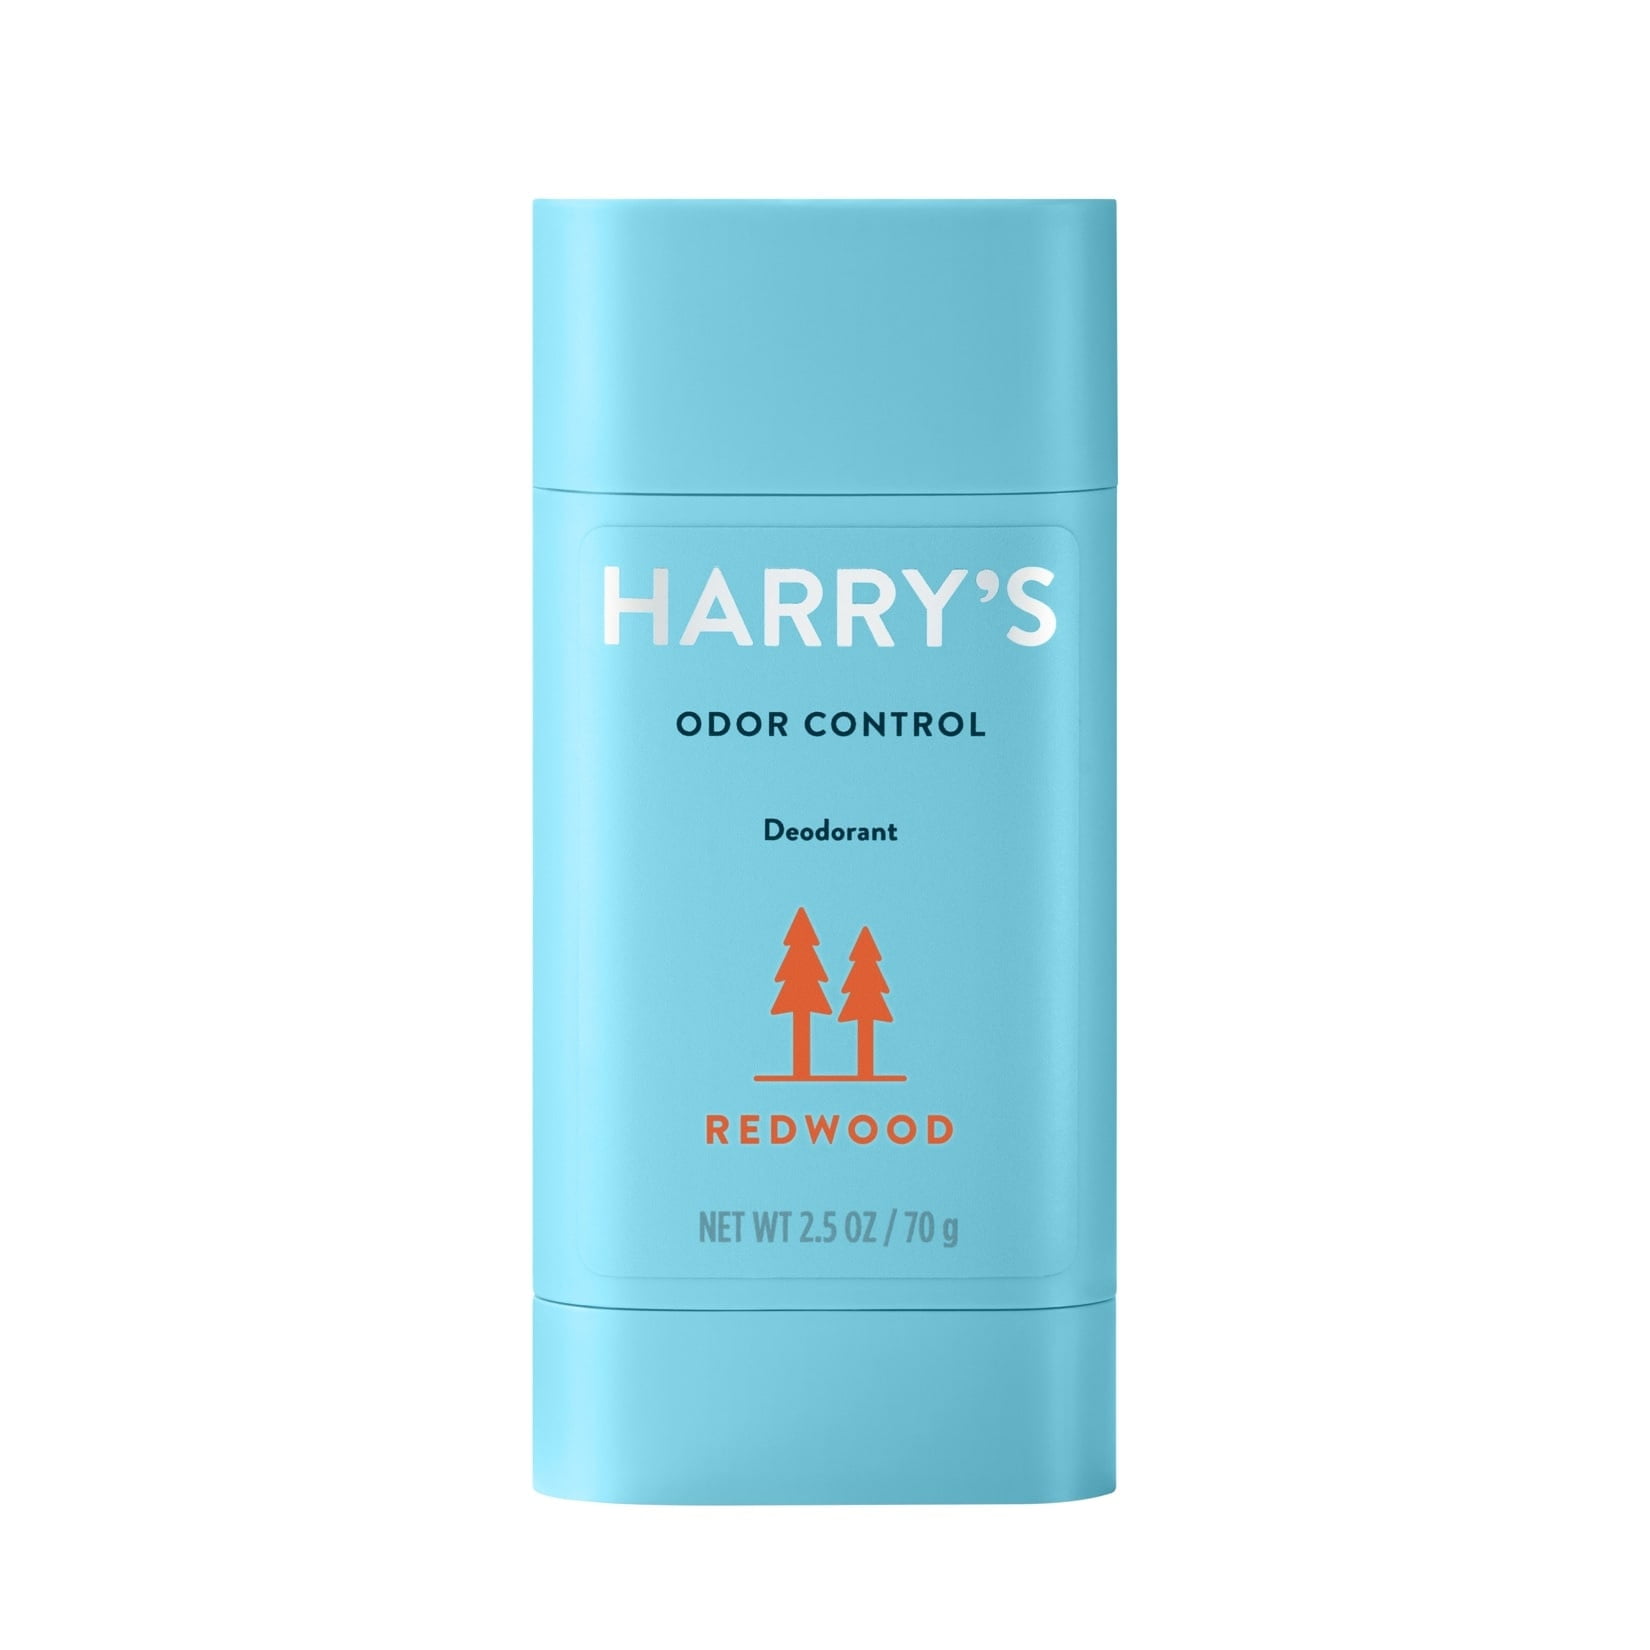 Harry's Men's Odor Protection Deodorant Stick, Redwood Scent, 2.5